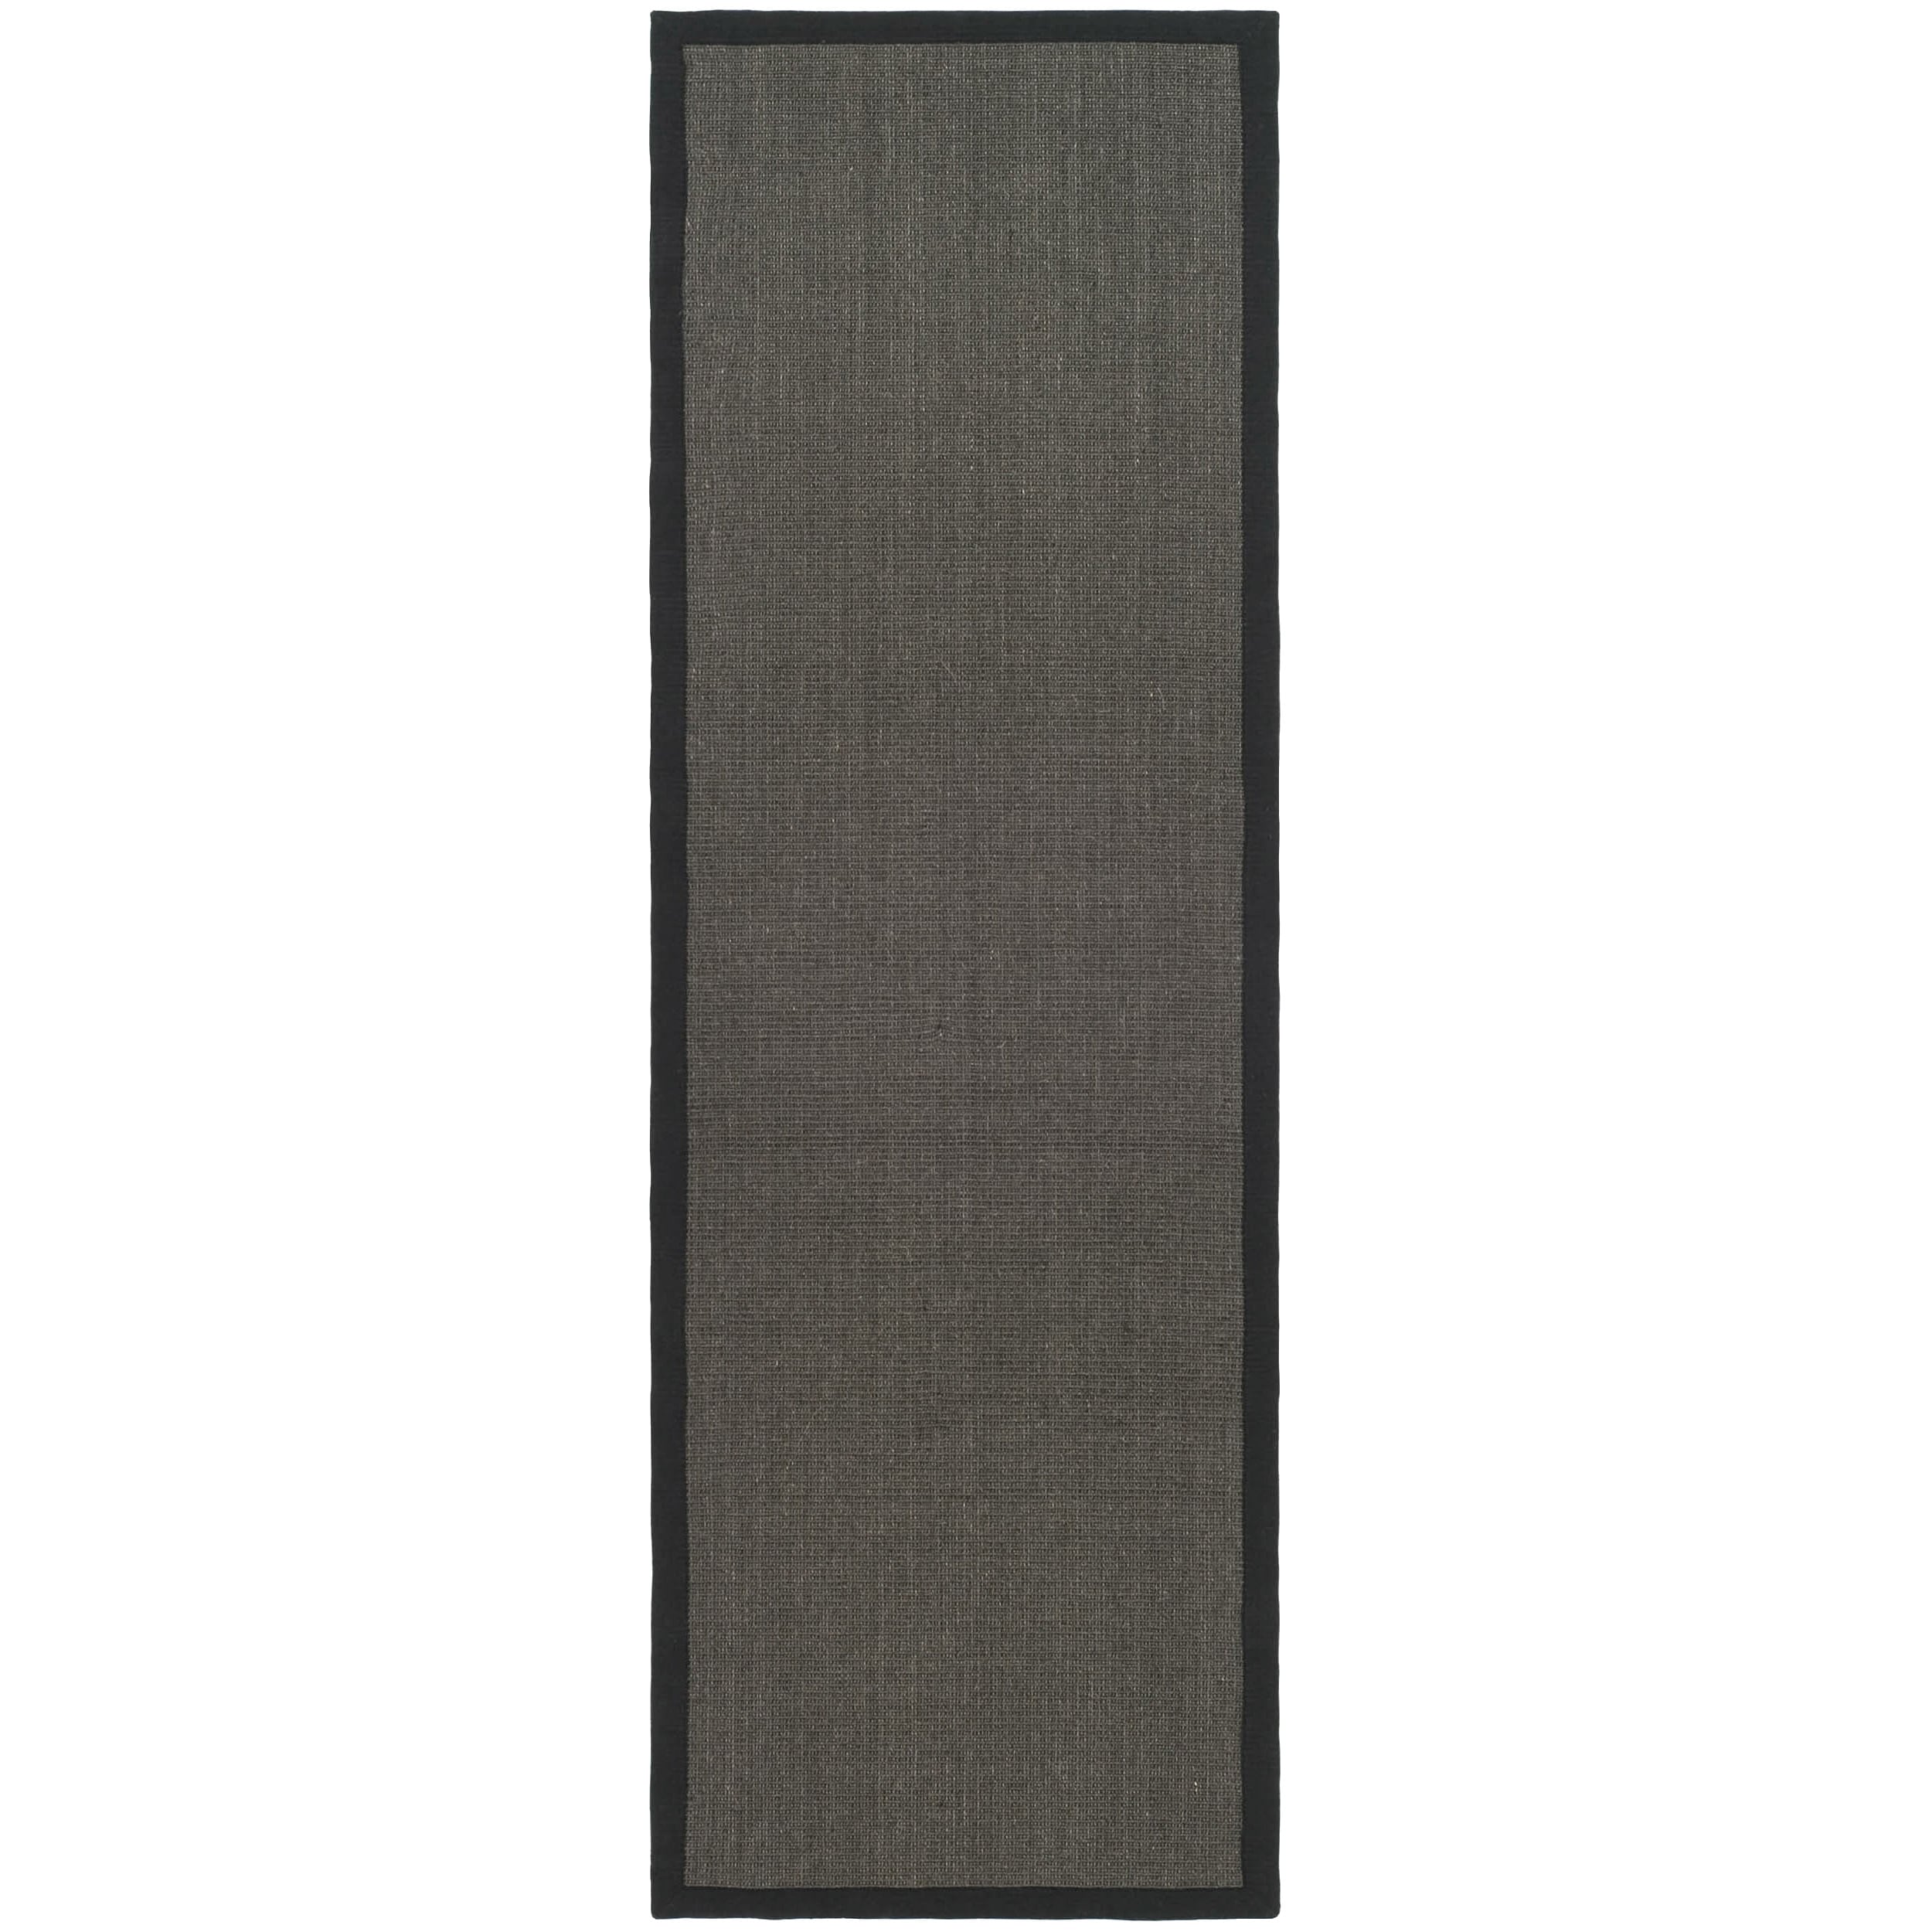 Hand woven Serenity Charcoal Grey Sisal Rug (2 6 X 6)